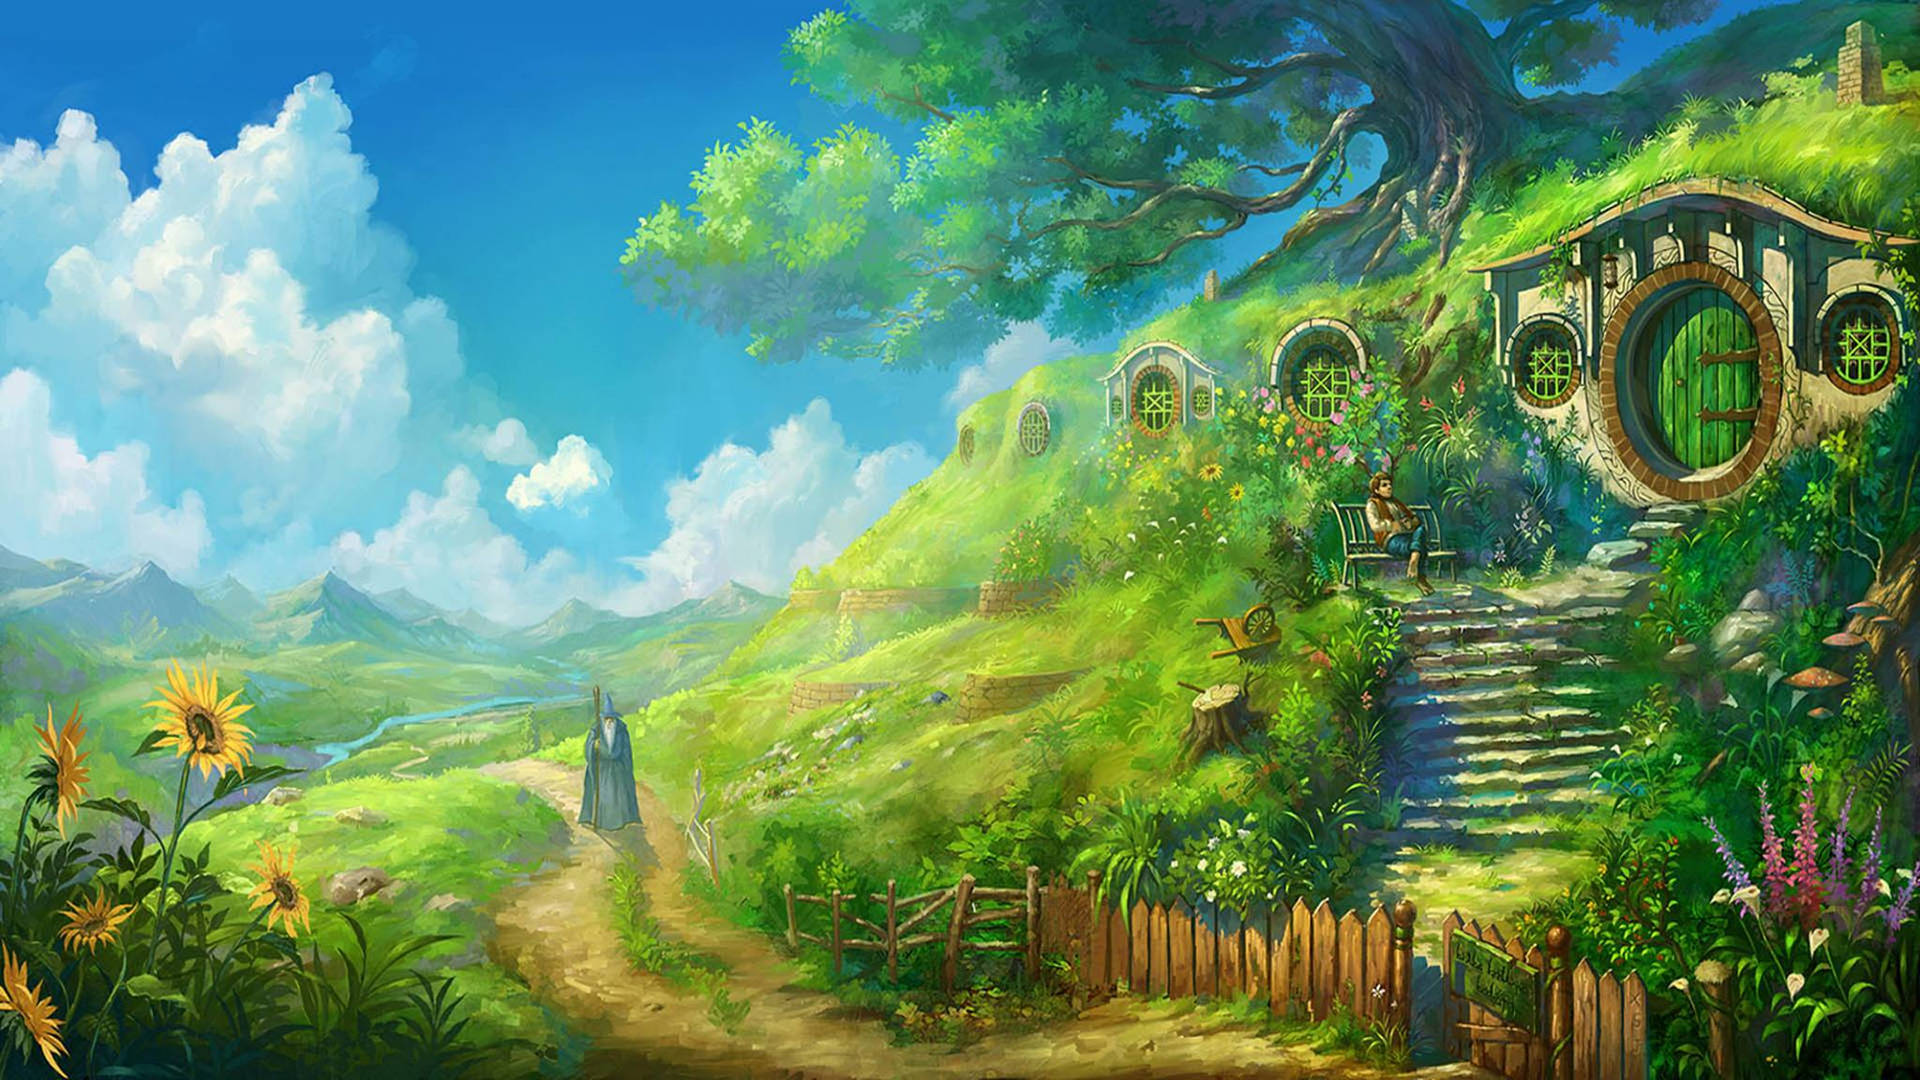 Studio Ghibli Hobbit Home Picture